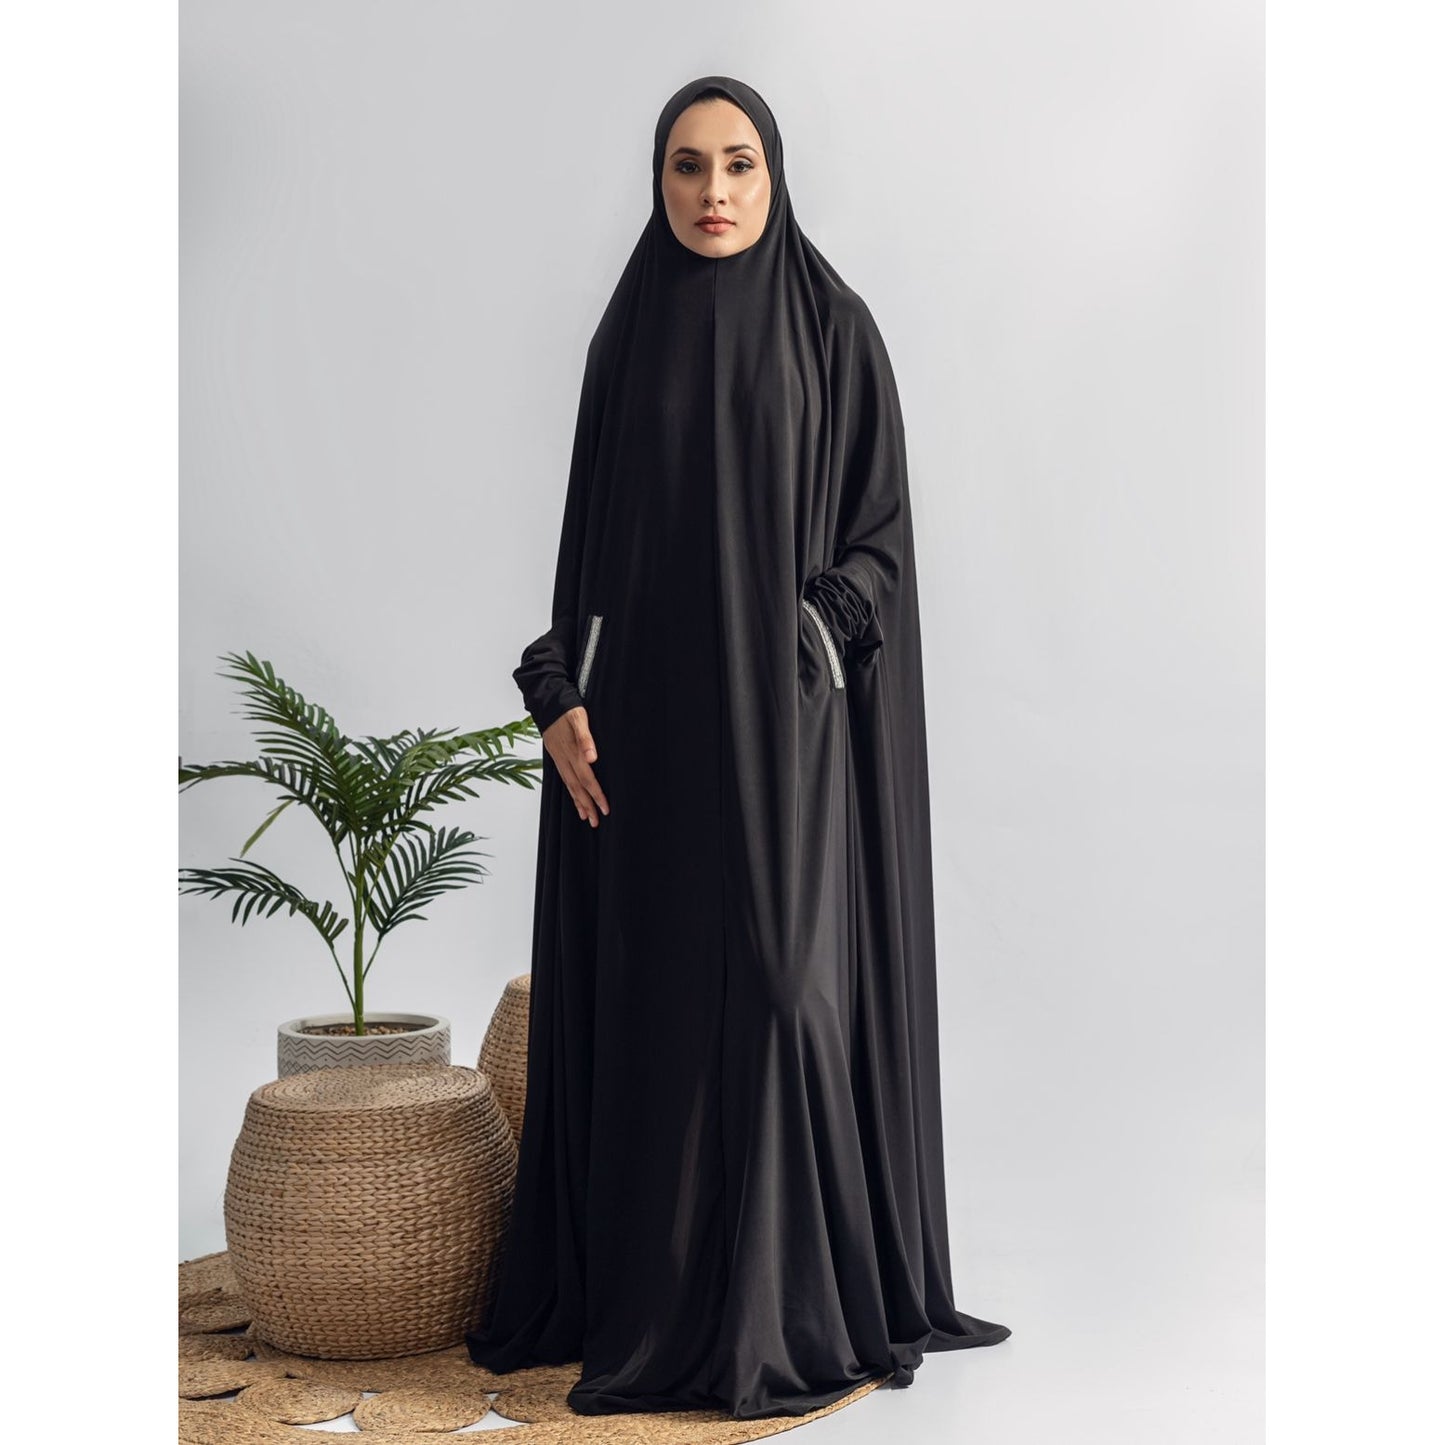 Pocket Burqa With Sleeves - Full Length: Full Black